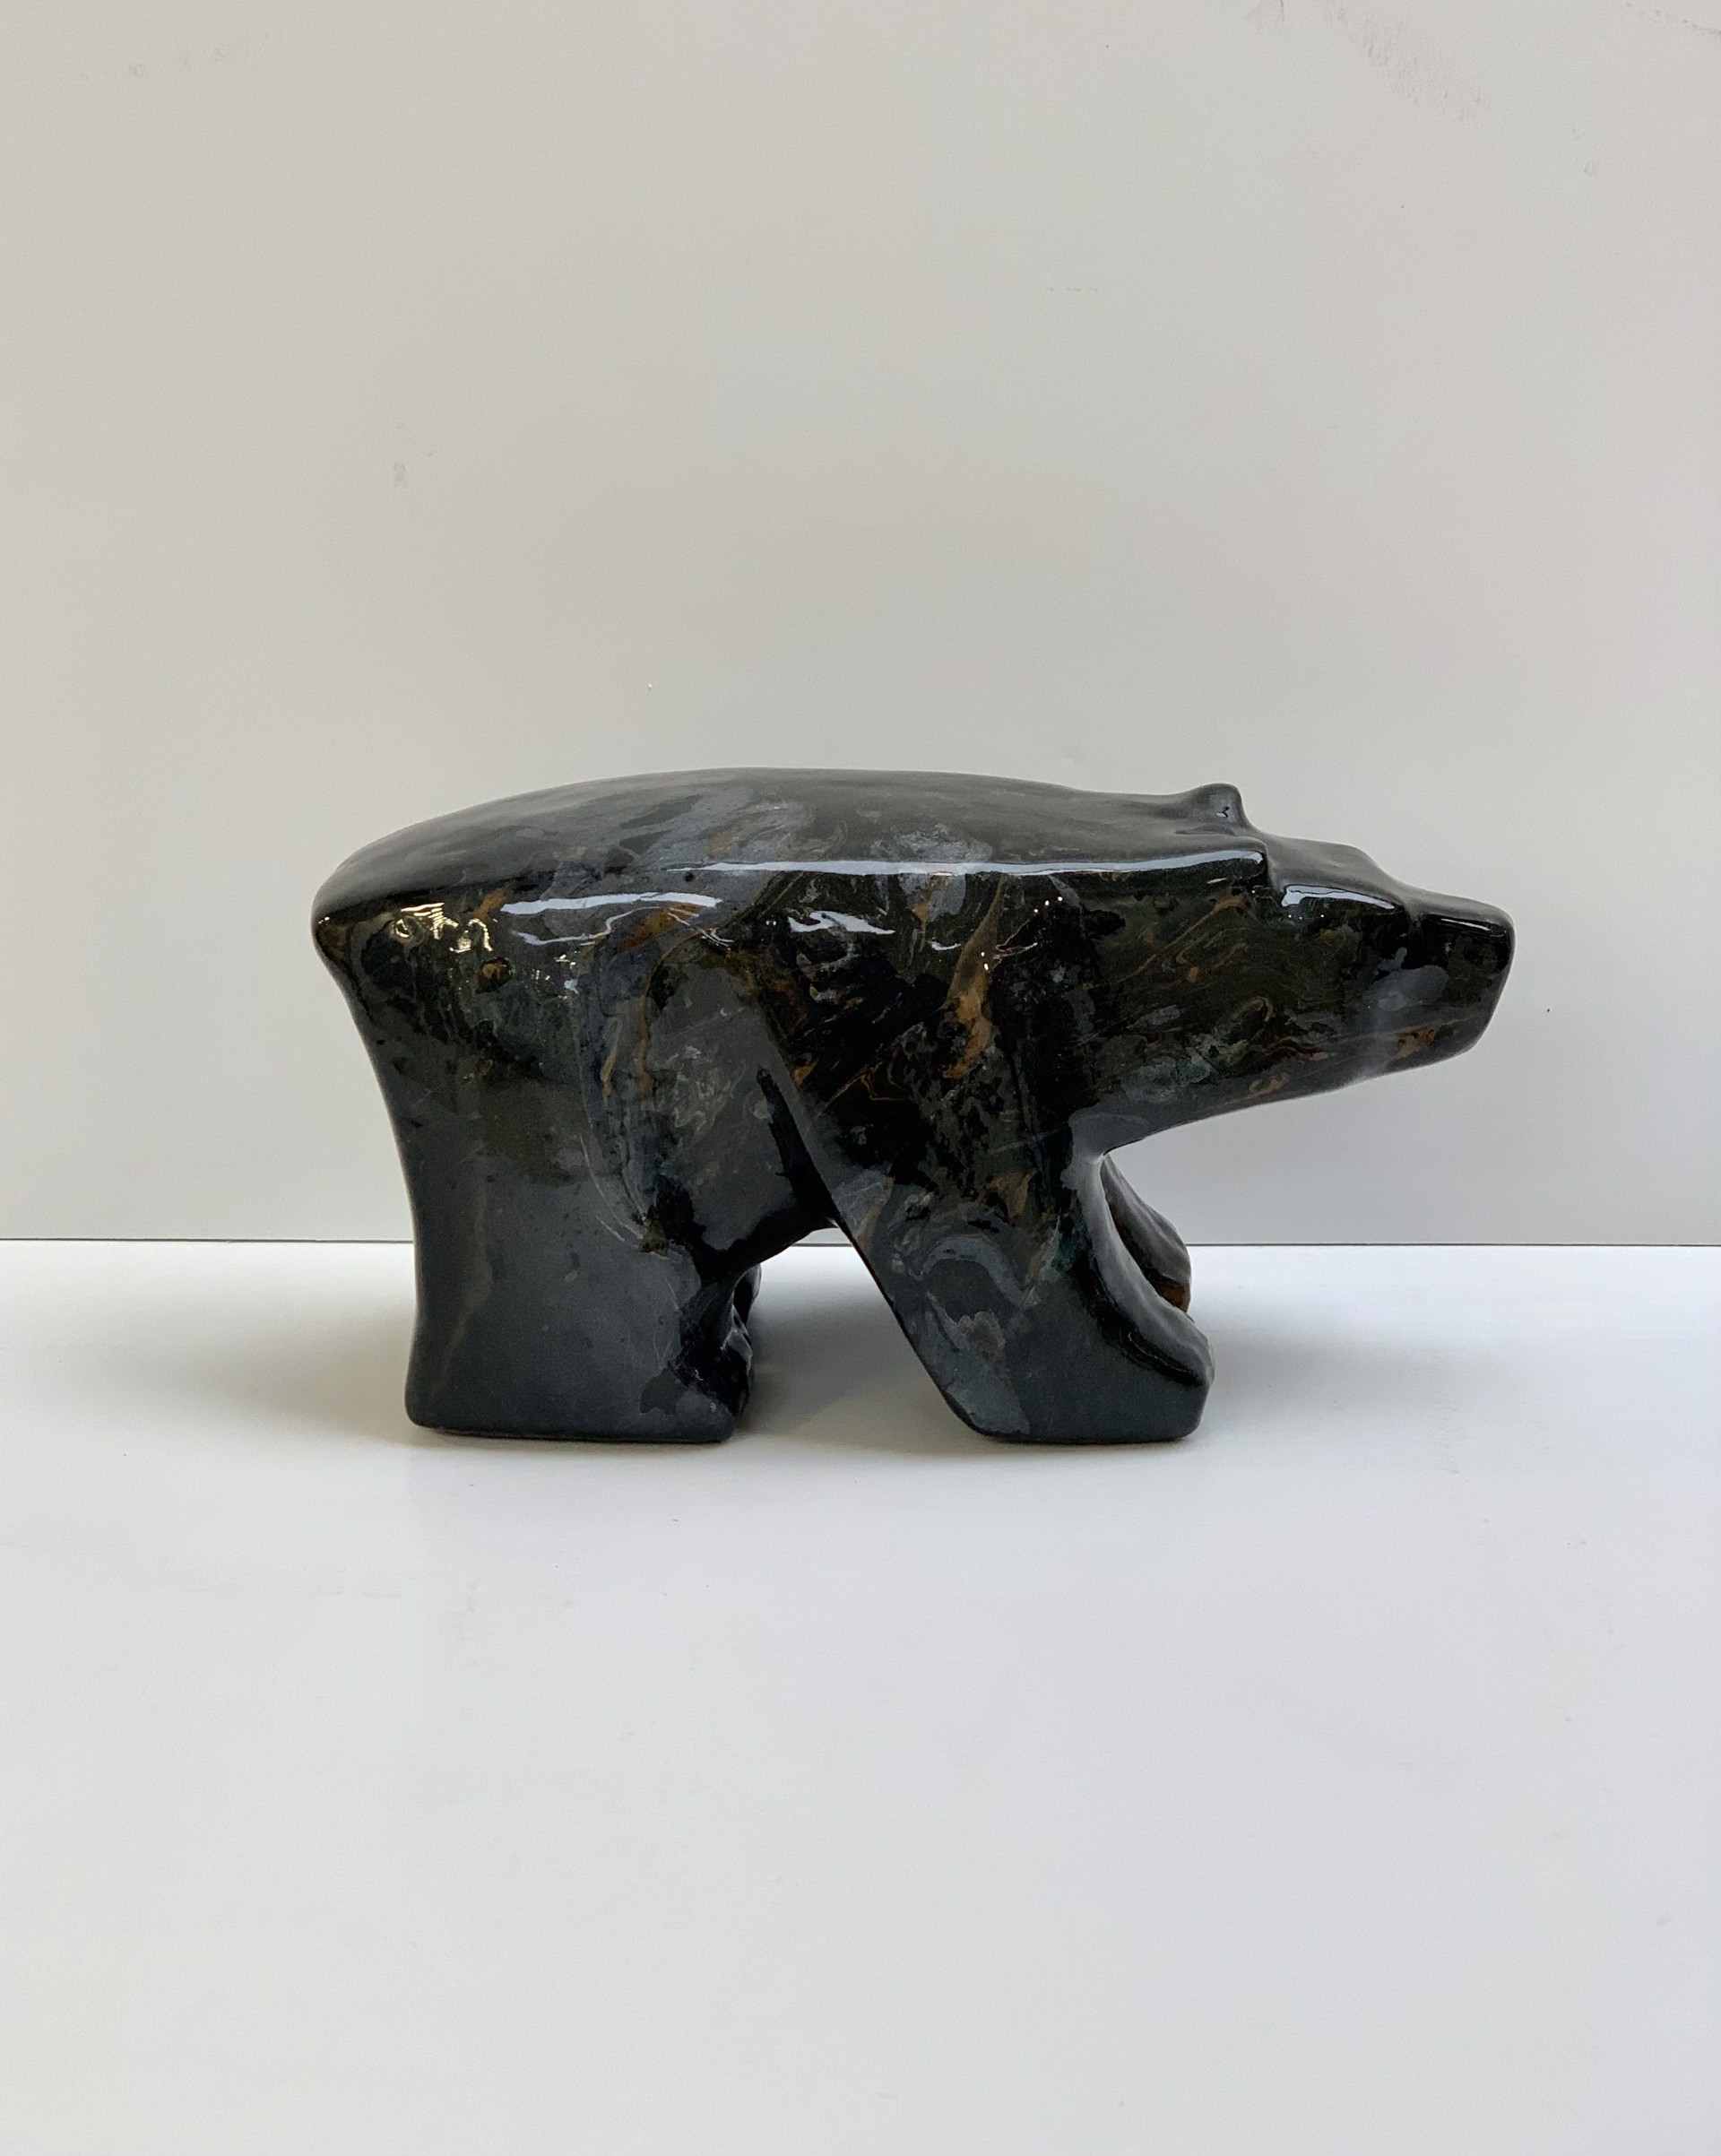 Walking Black Bear by Allan Waidman